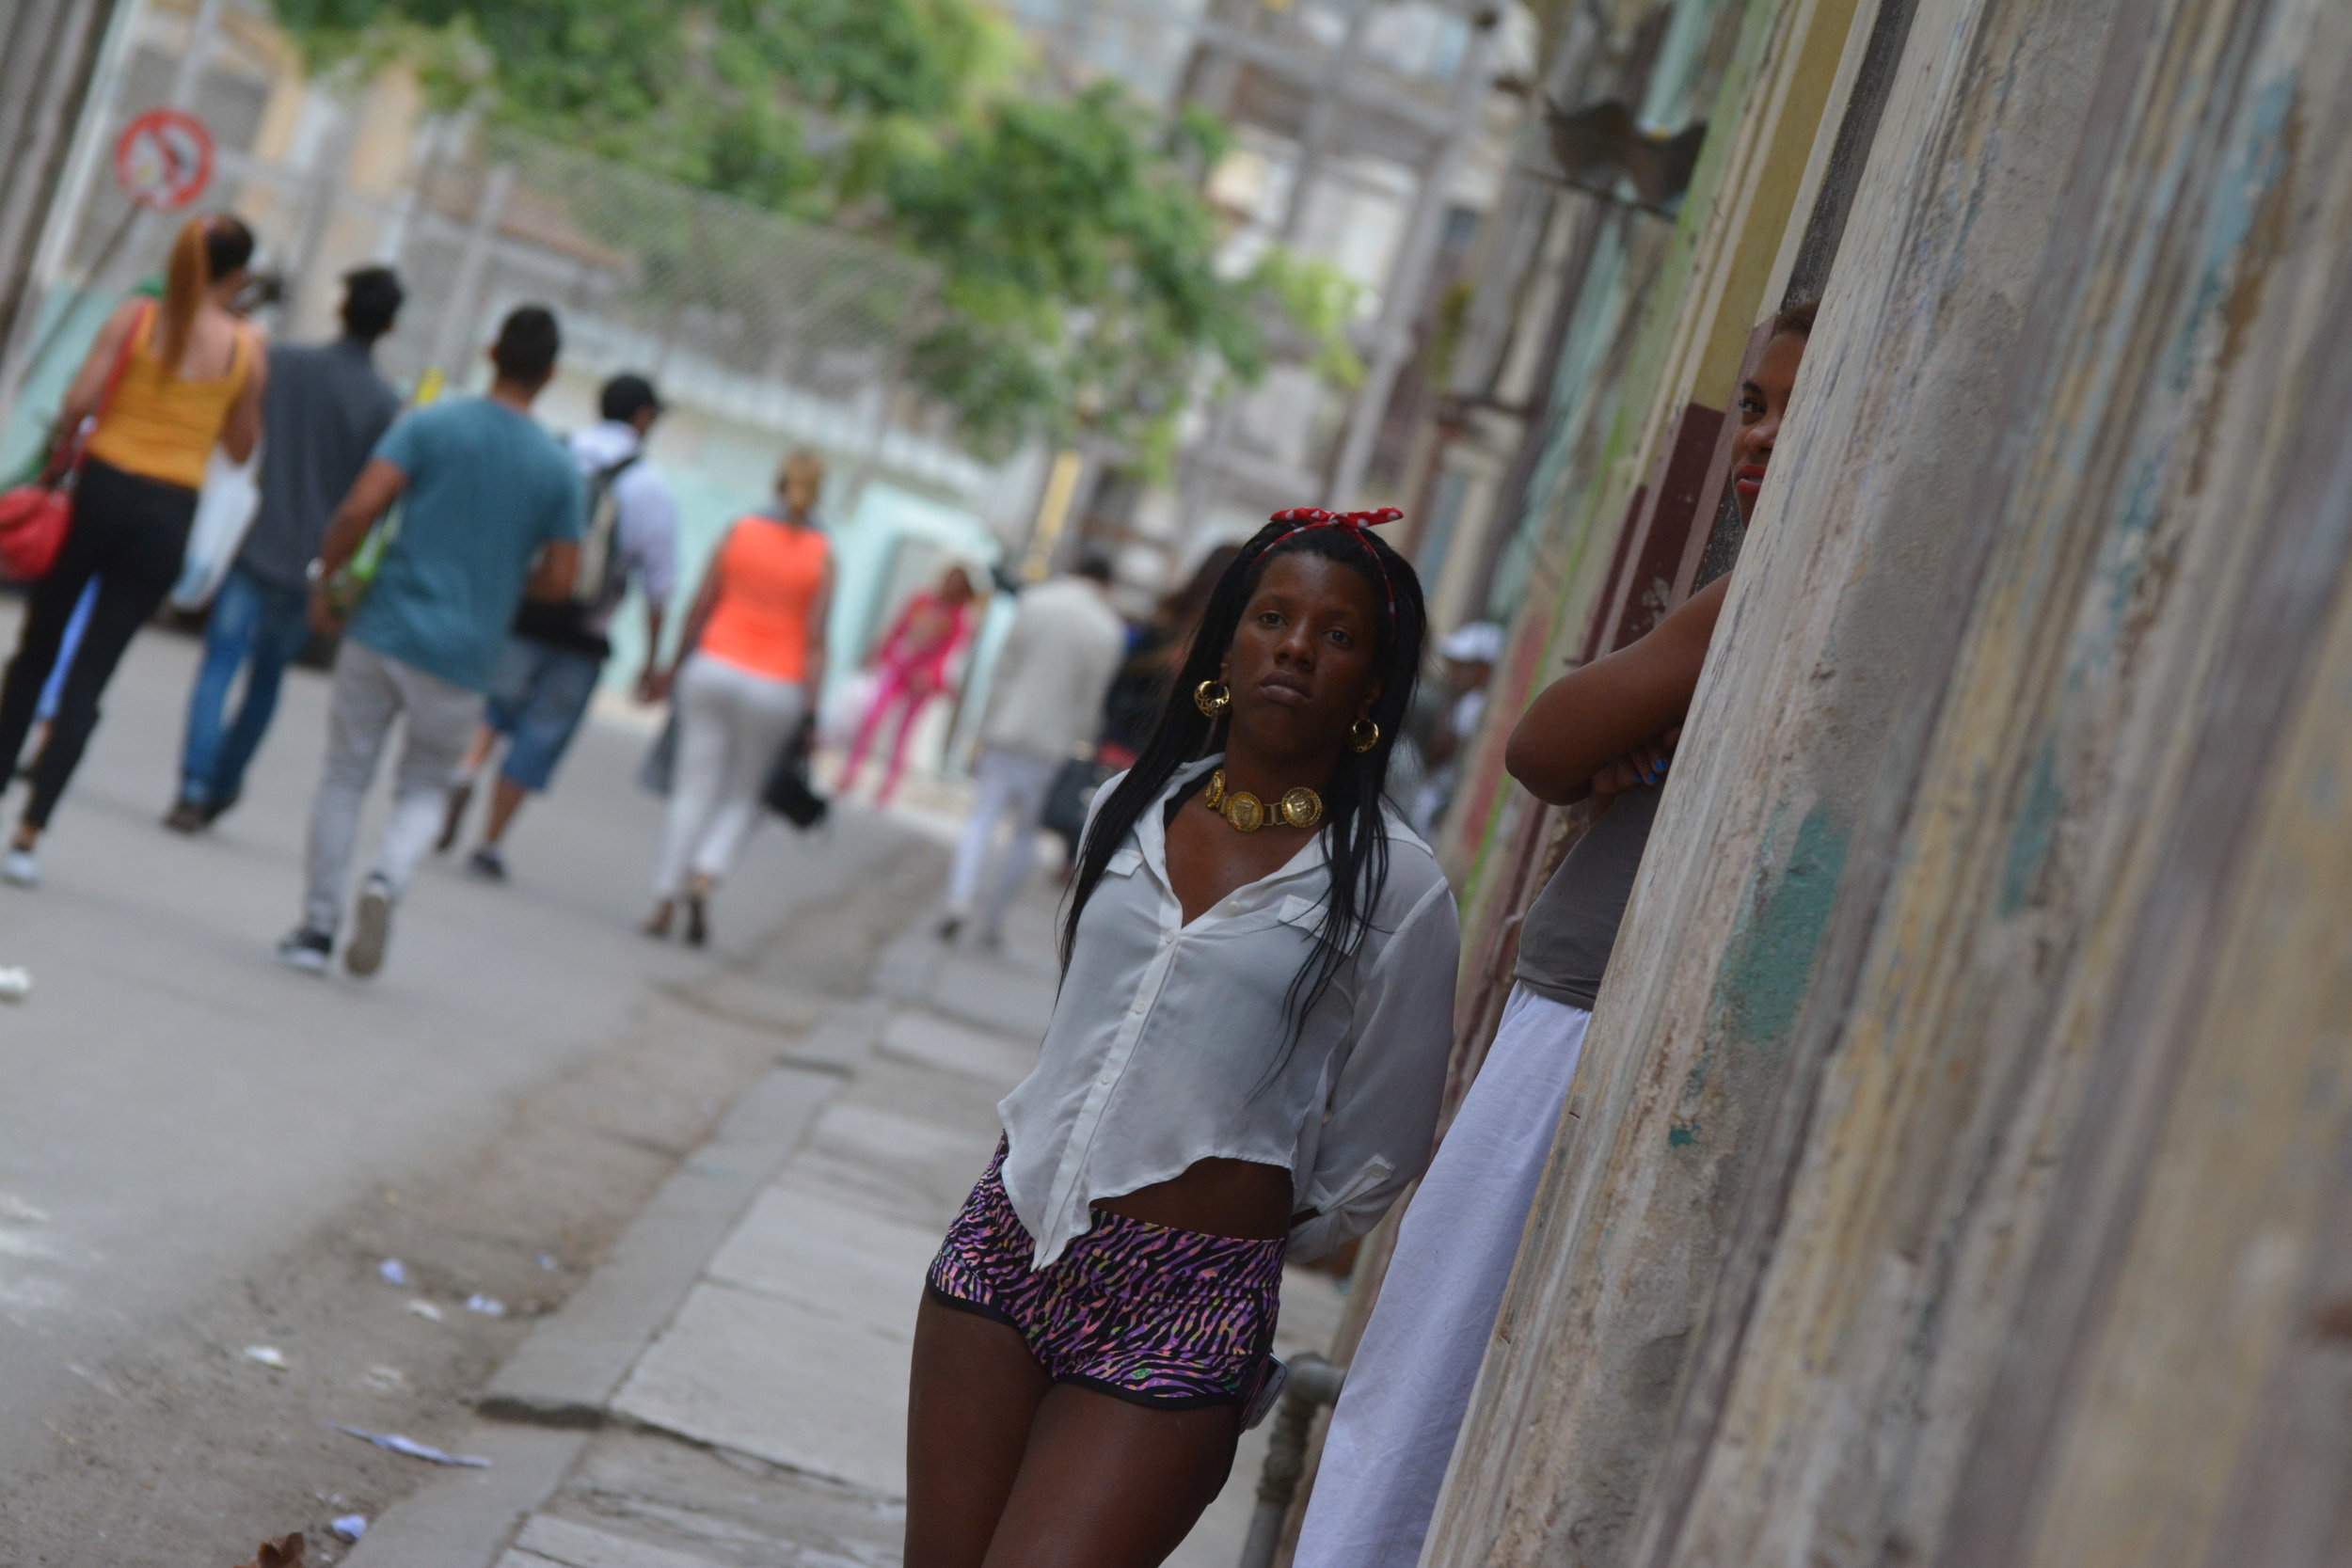 Styles for sex in Havana